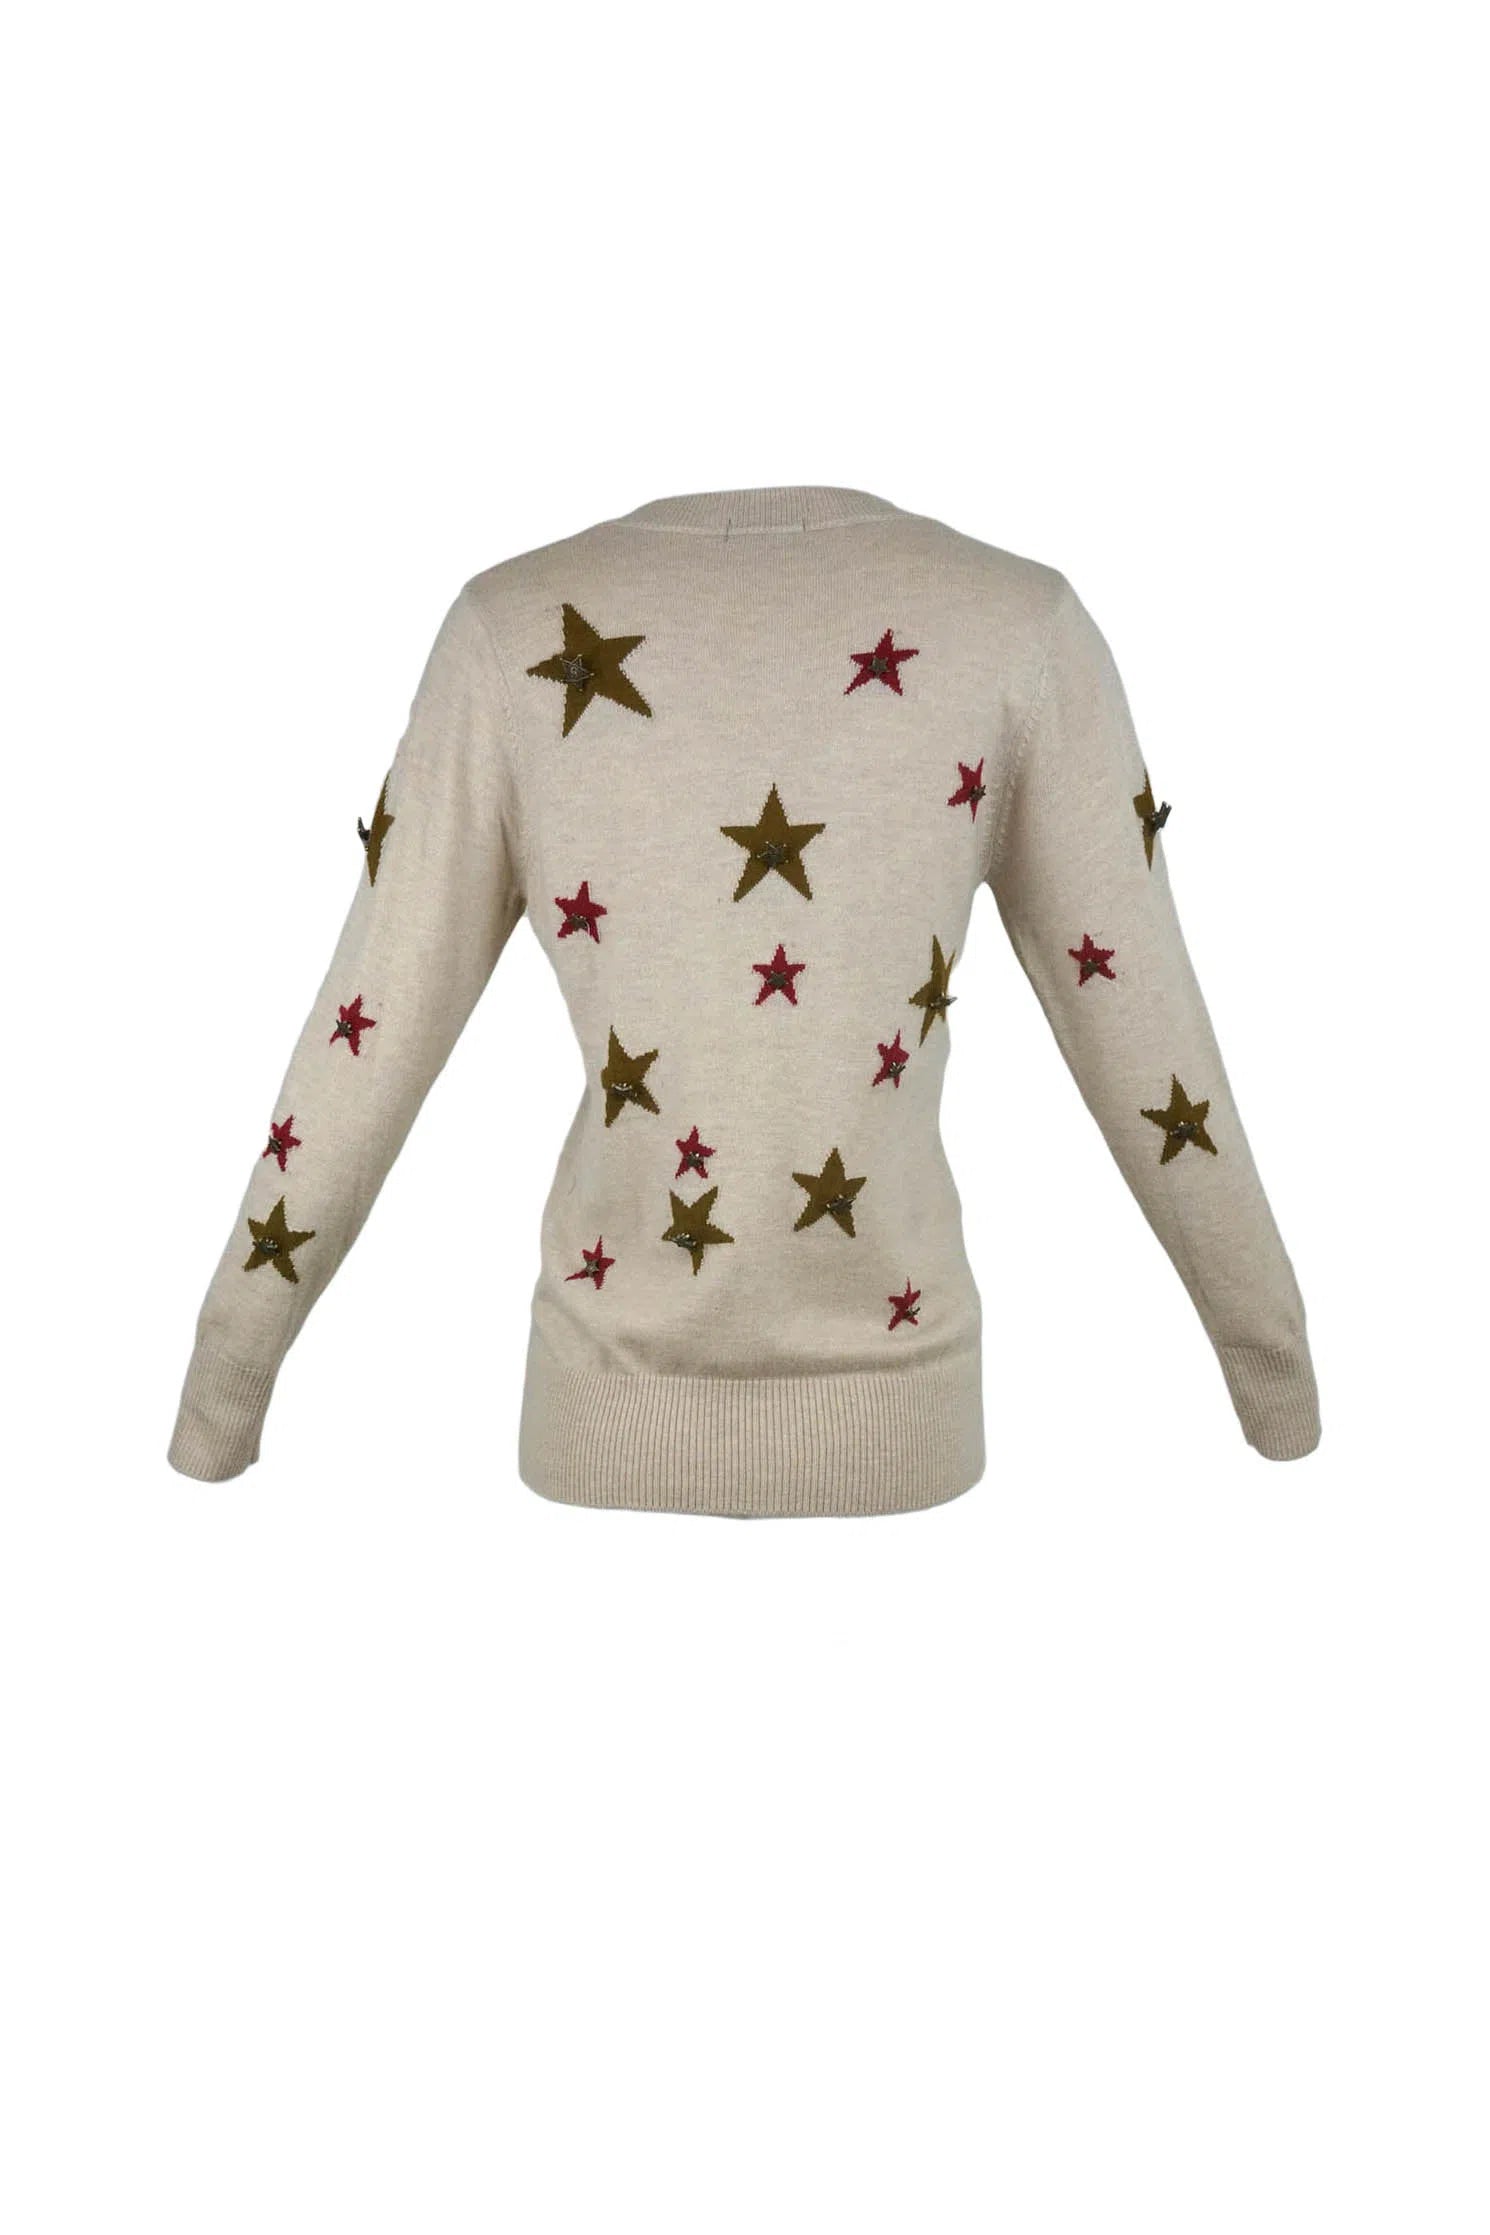 Chanel Métiers d'Art Paris‐Dallas Star Sweater 2014